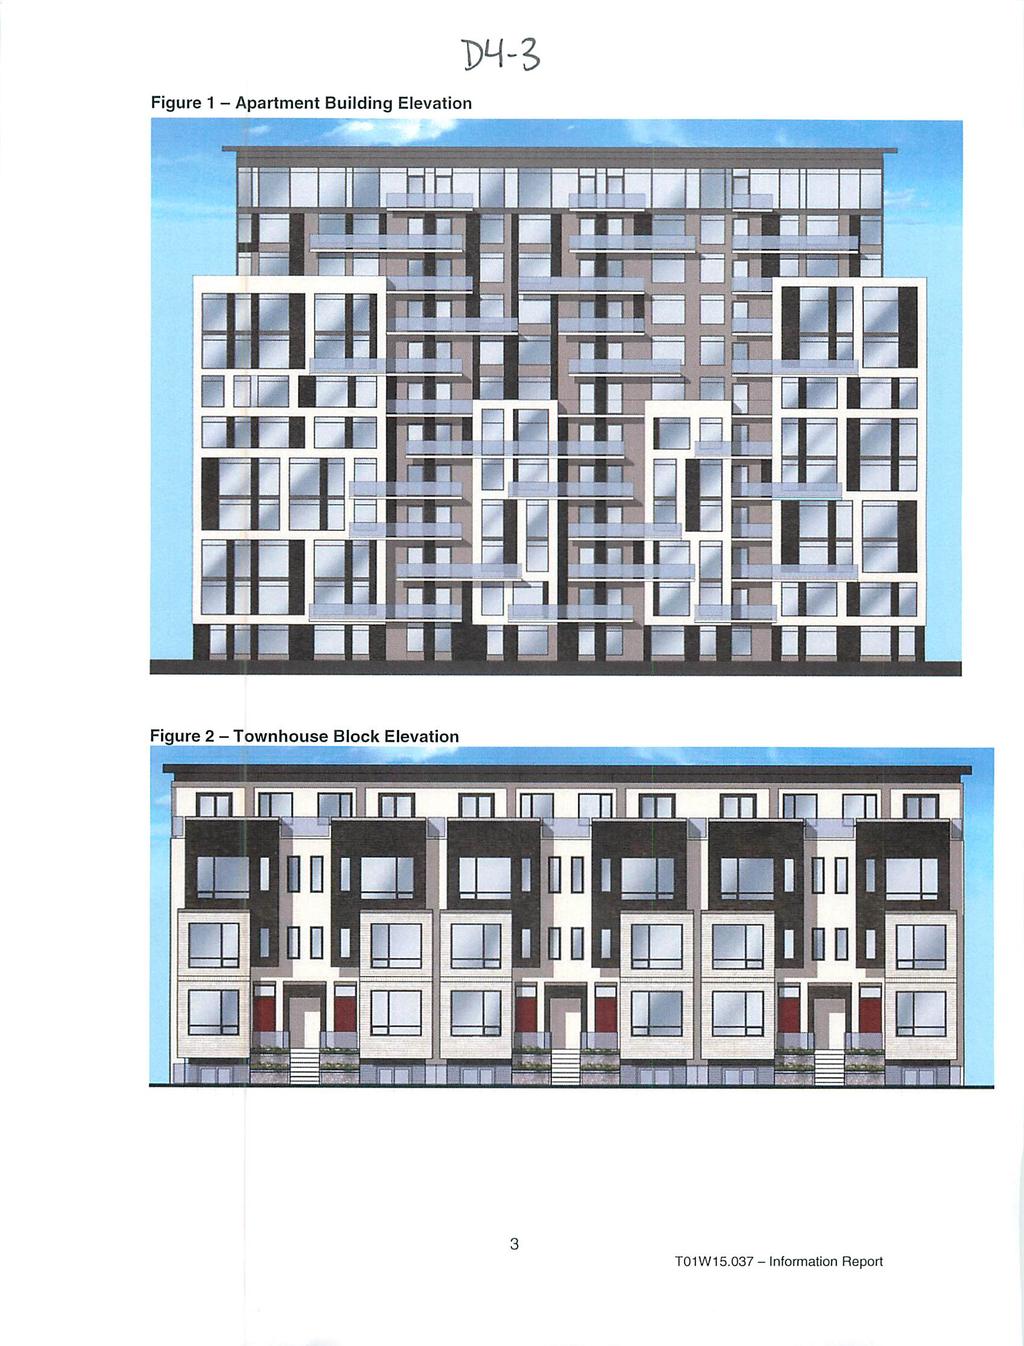 Figure 1 - Apartment Building Elevation